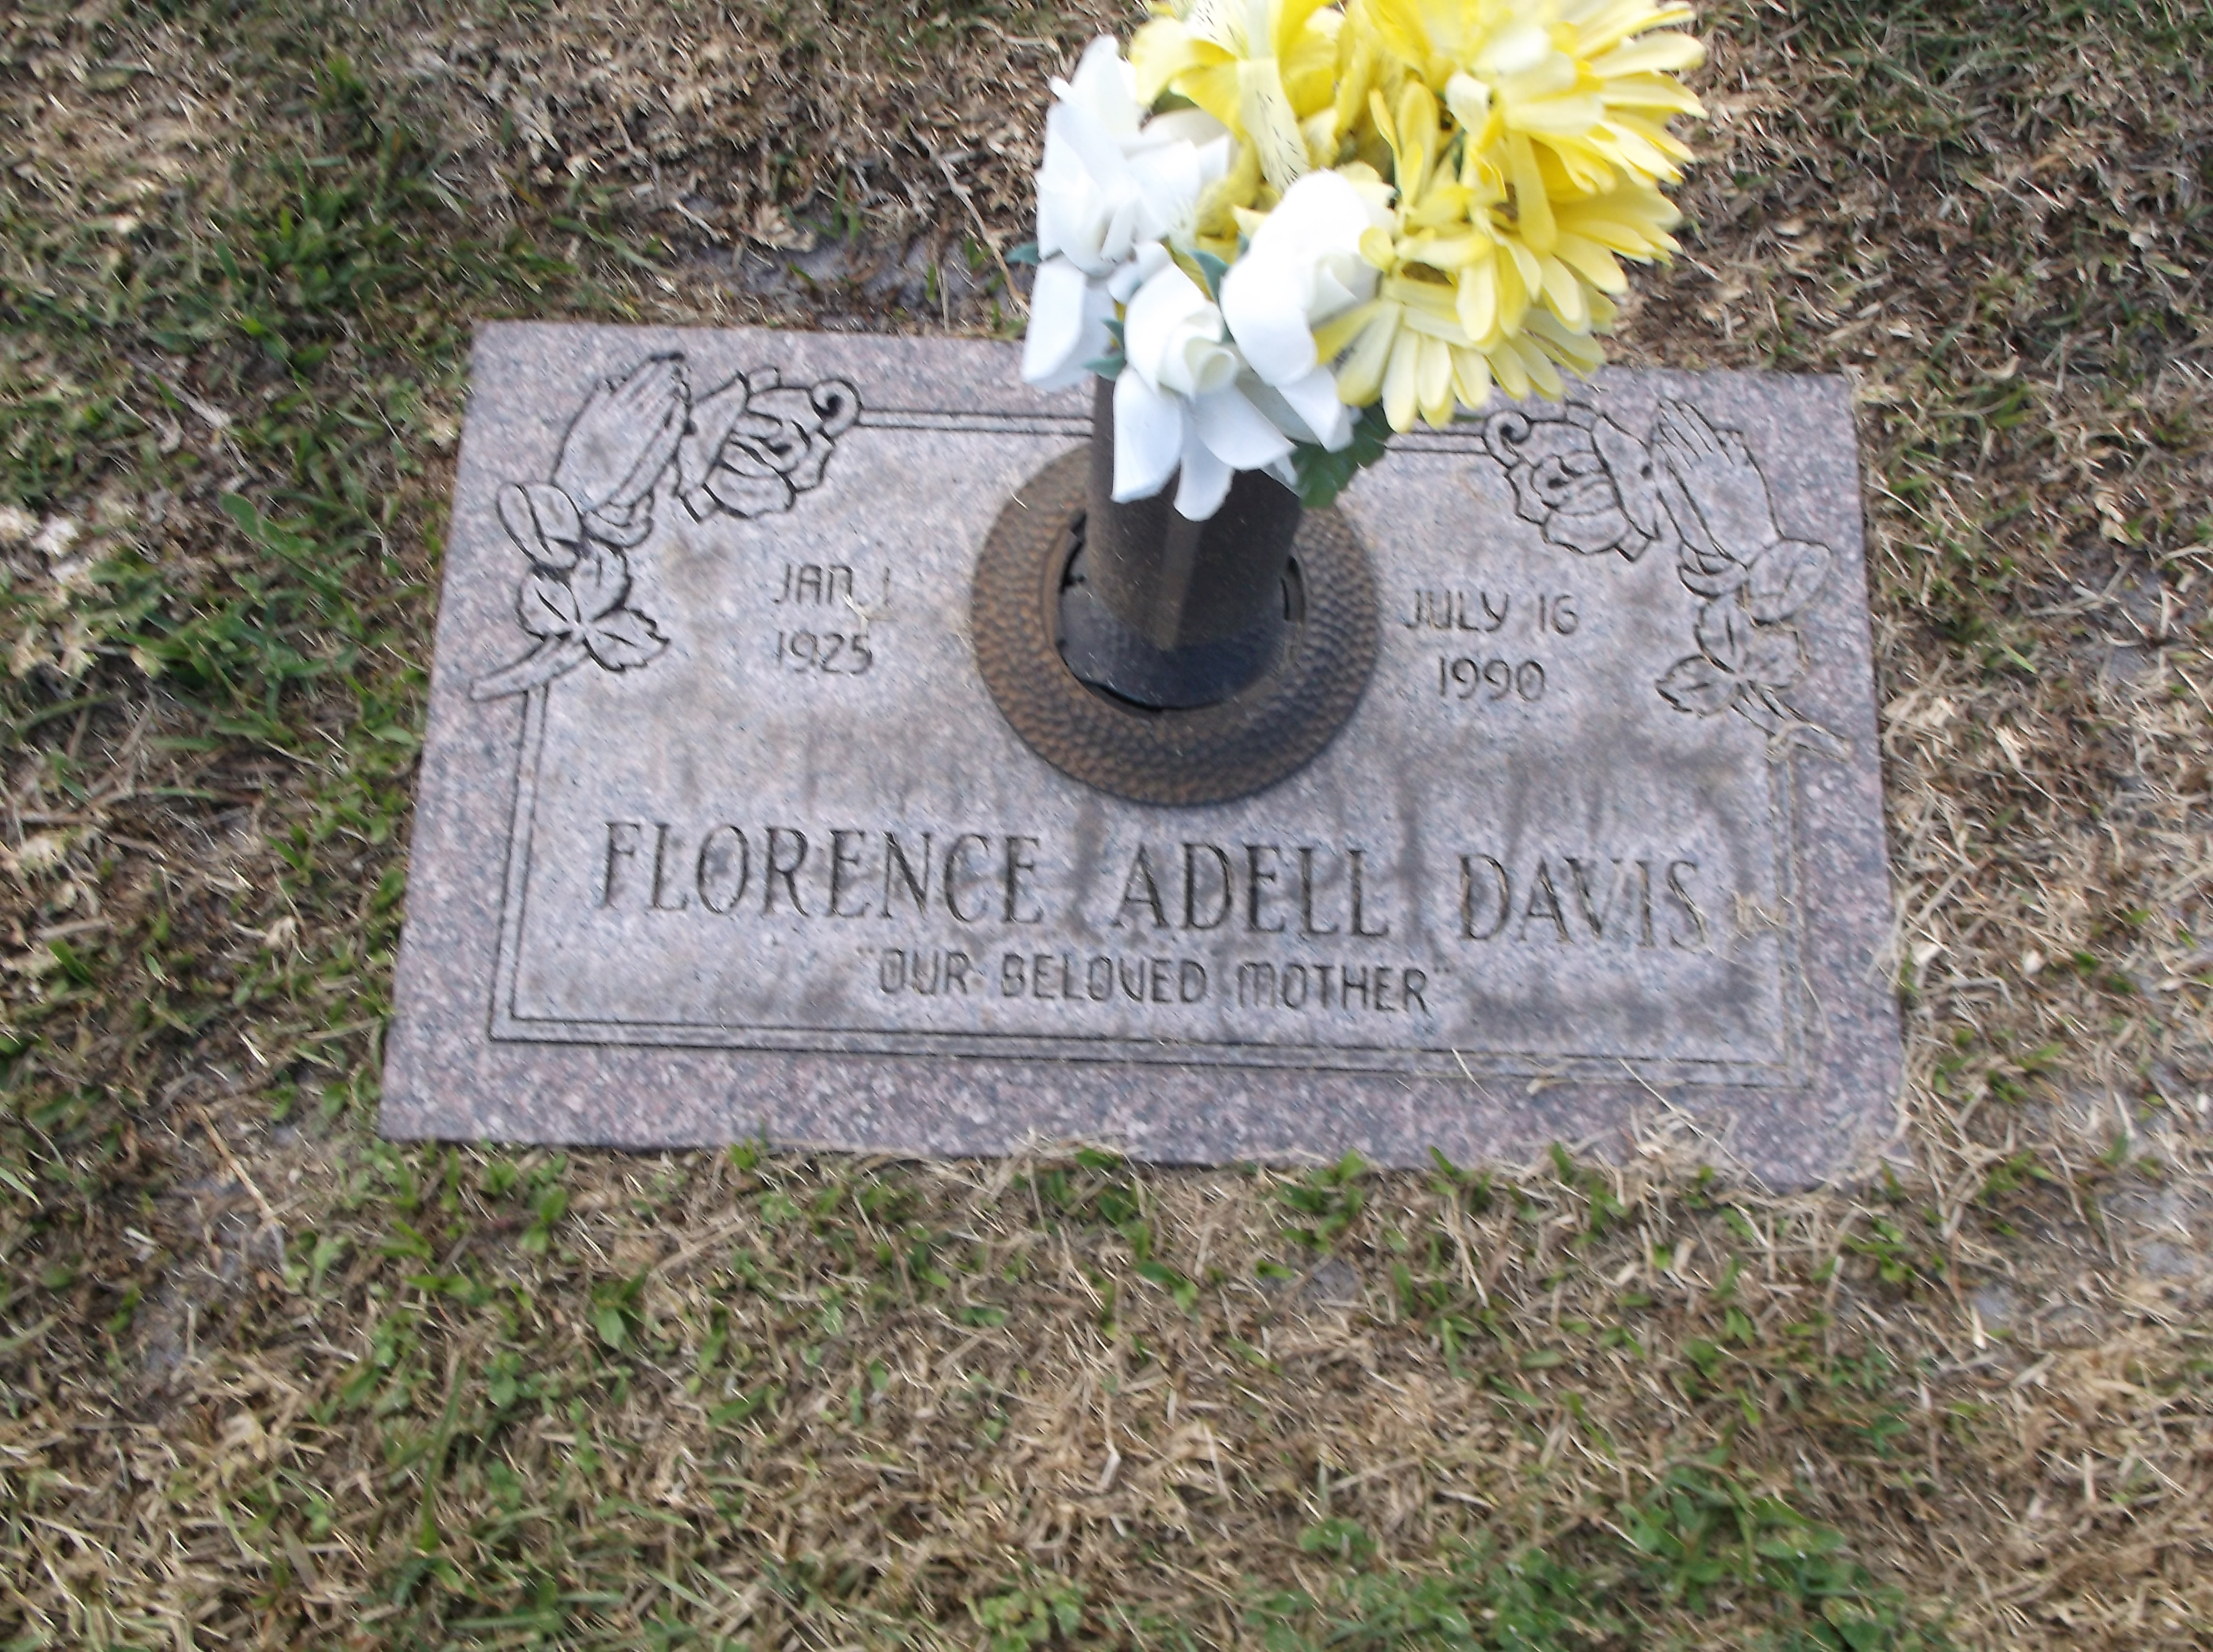 Florence Adell Davis